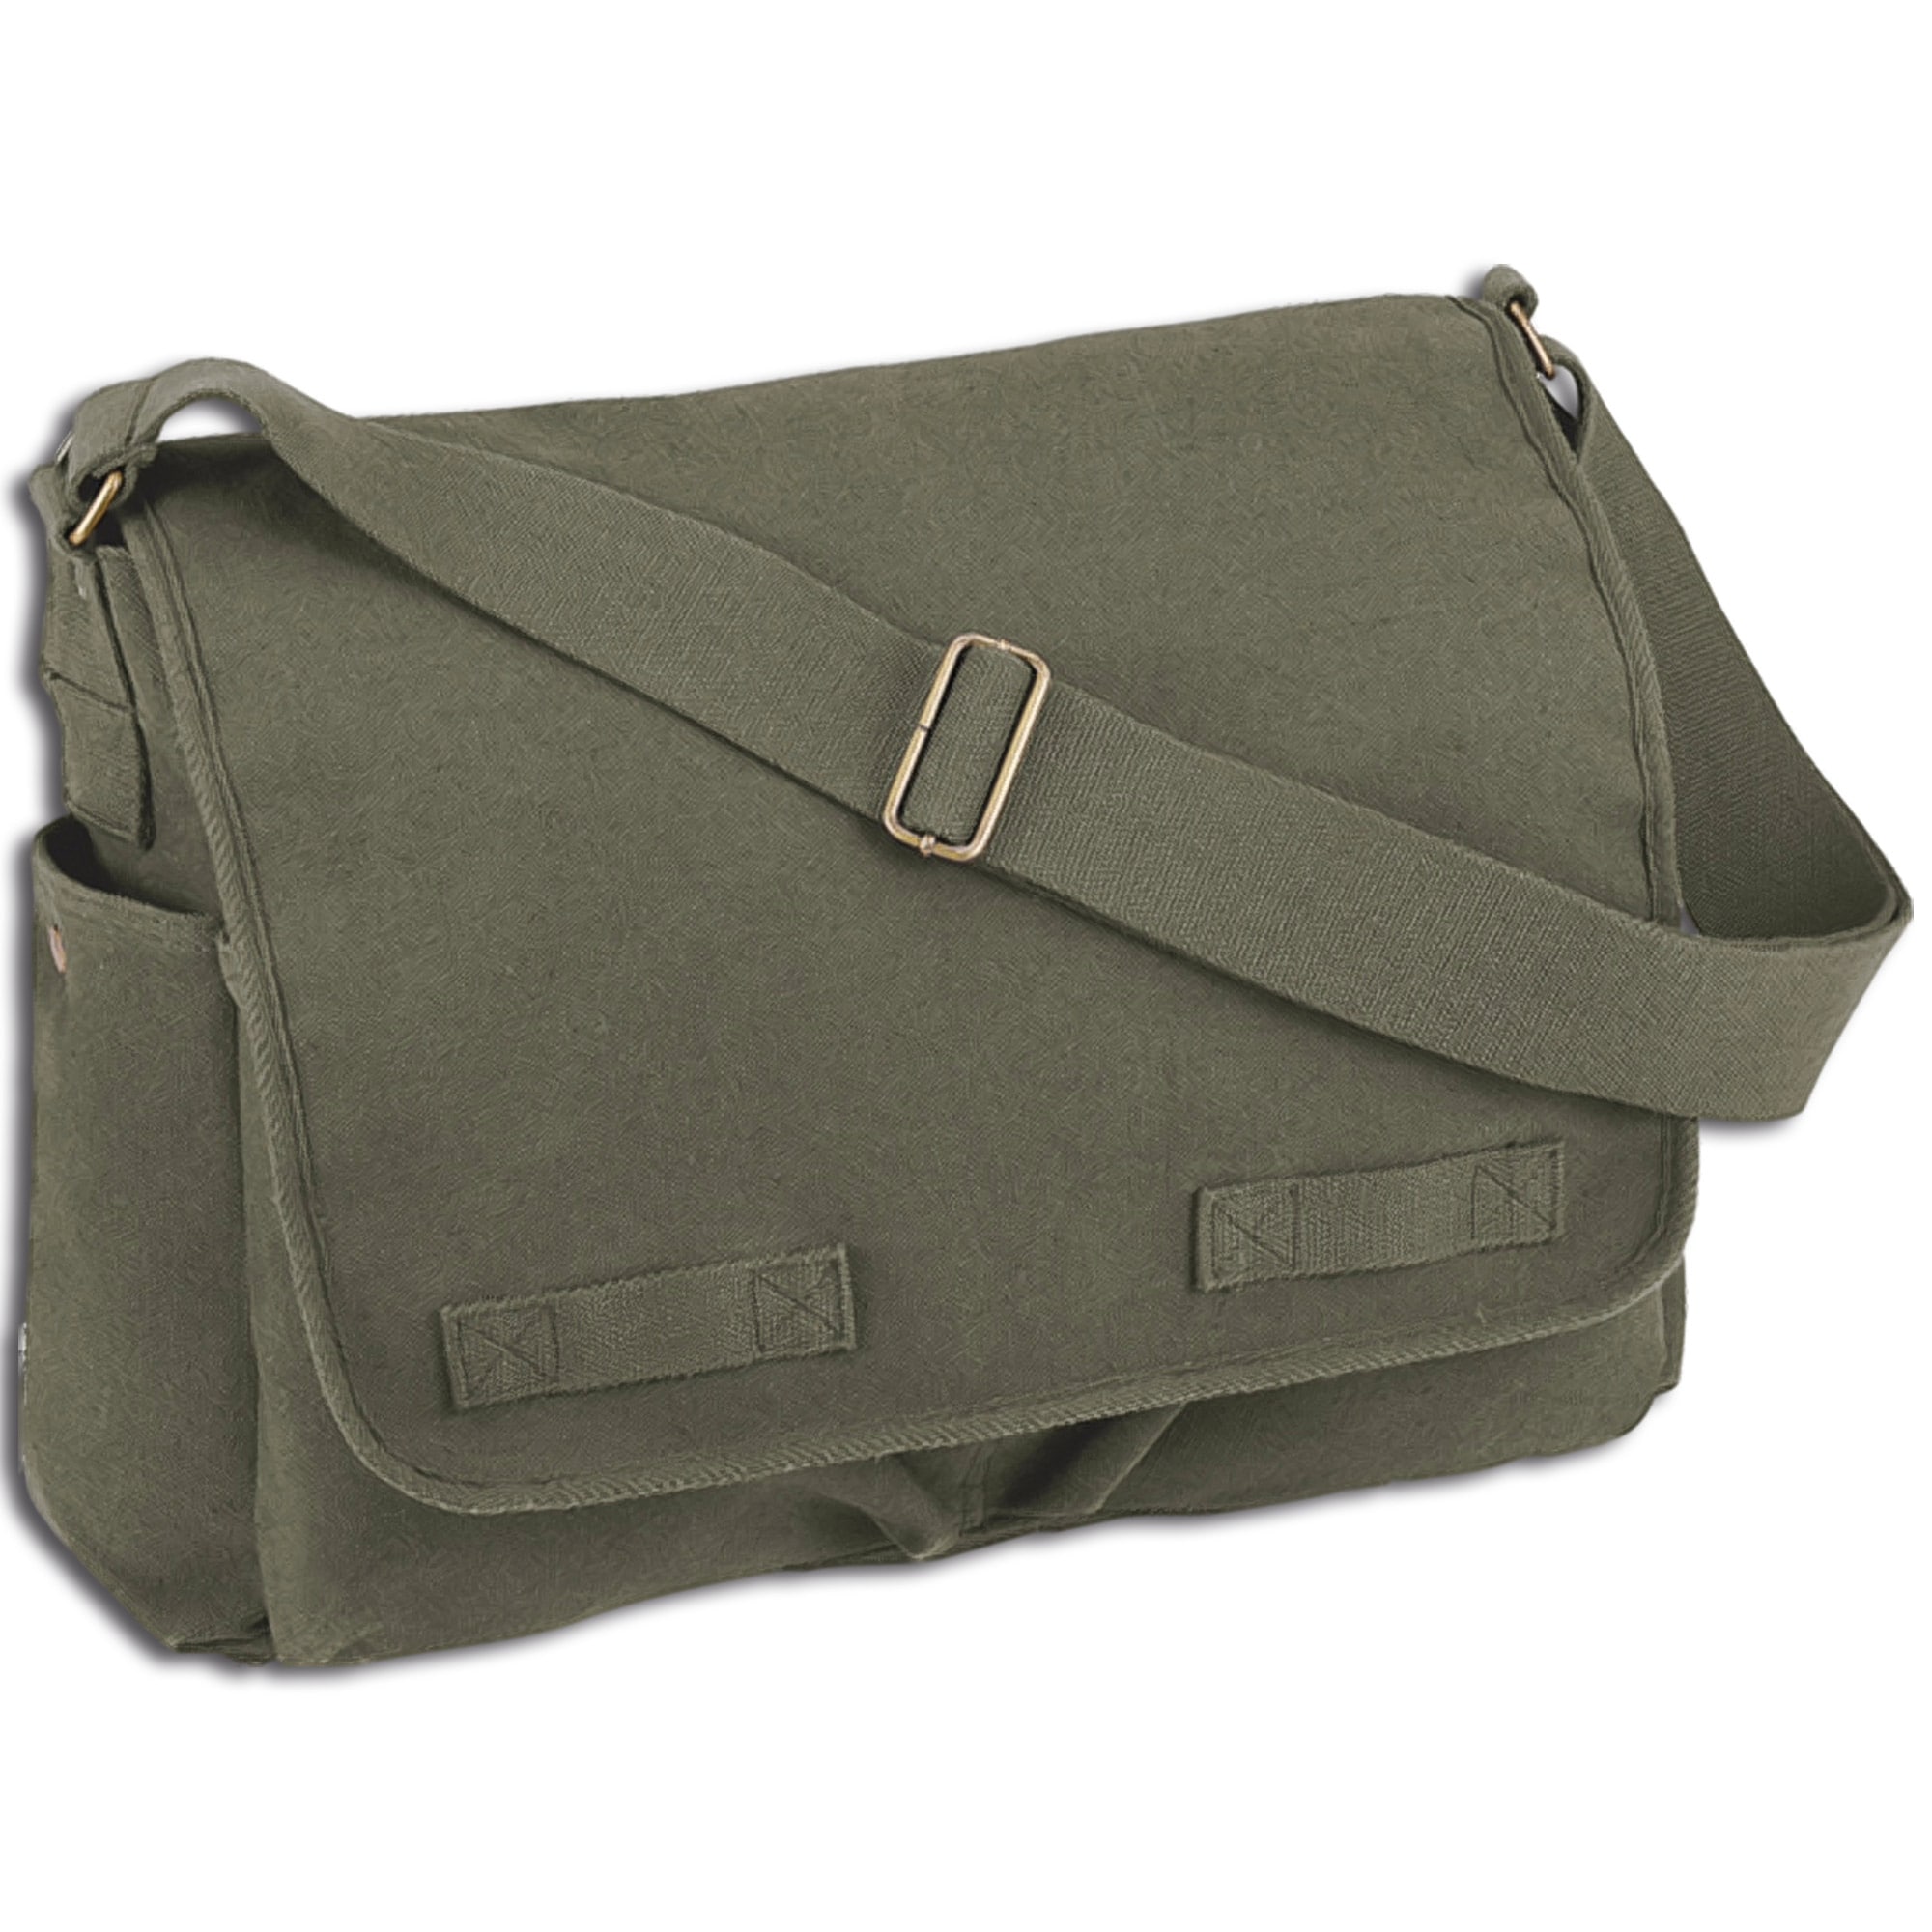 Messenger Canvas Bag Classic olive green | Messenger Canvas Bag Classic ...